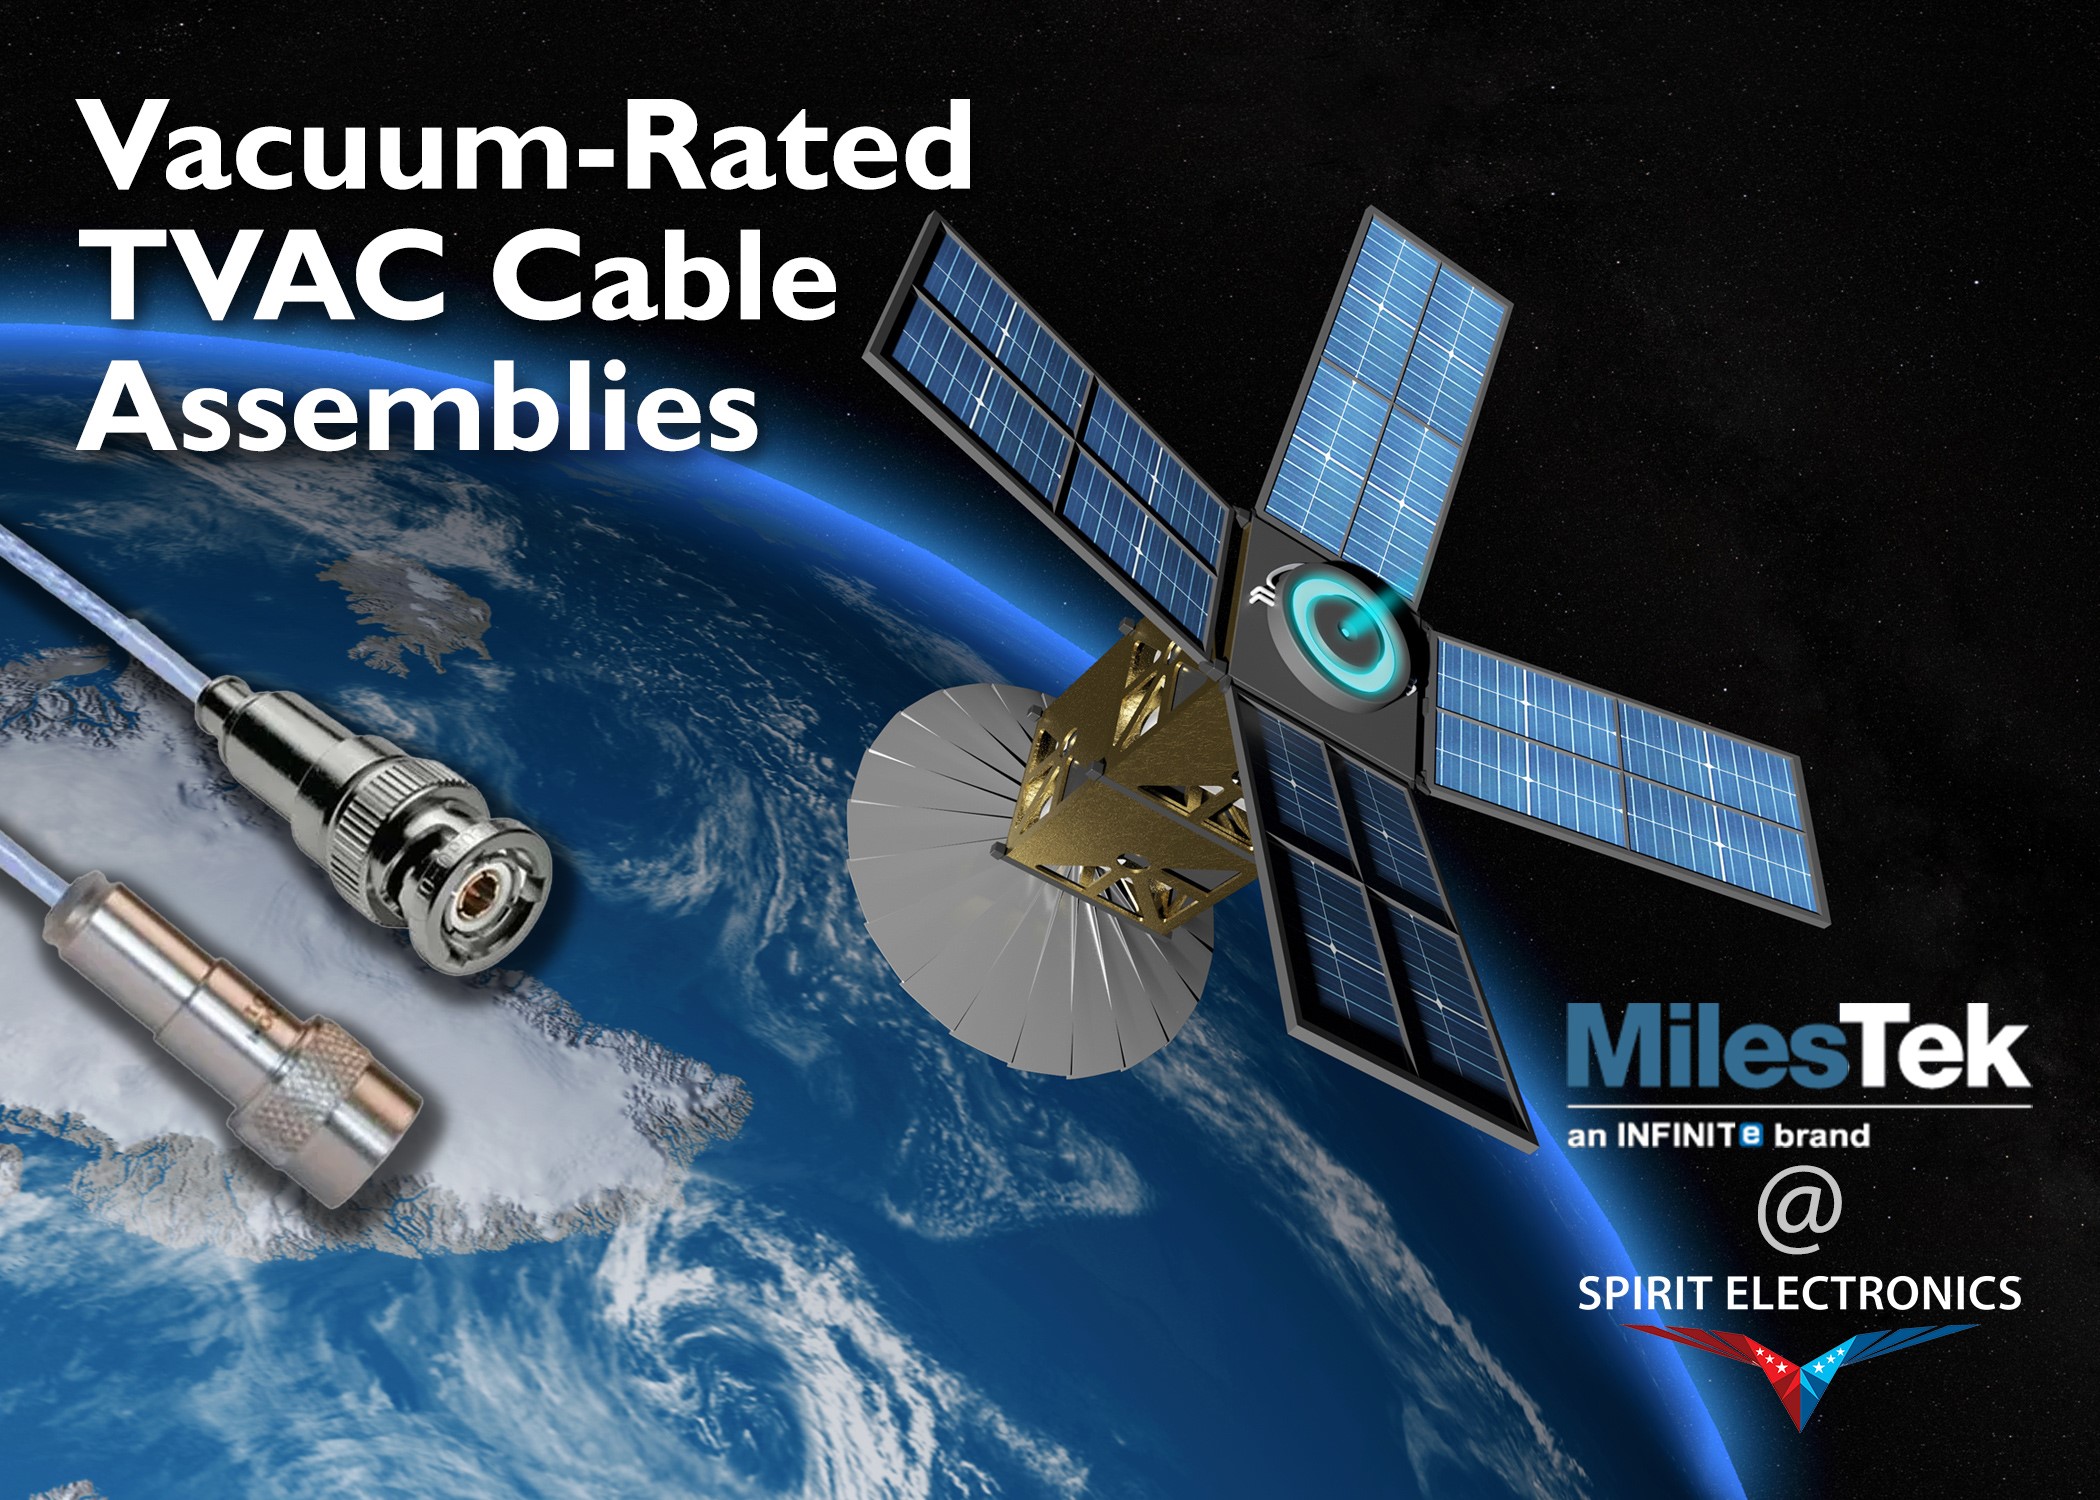 MilesTek TVAC Cable Assemblies Vacuum-Rated Space